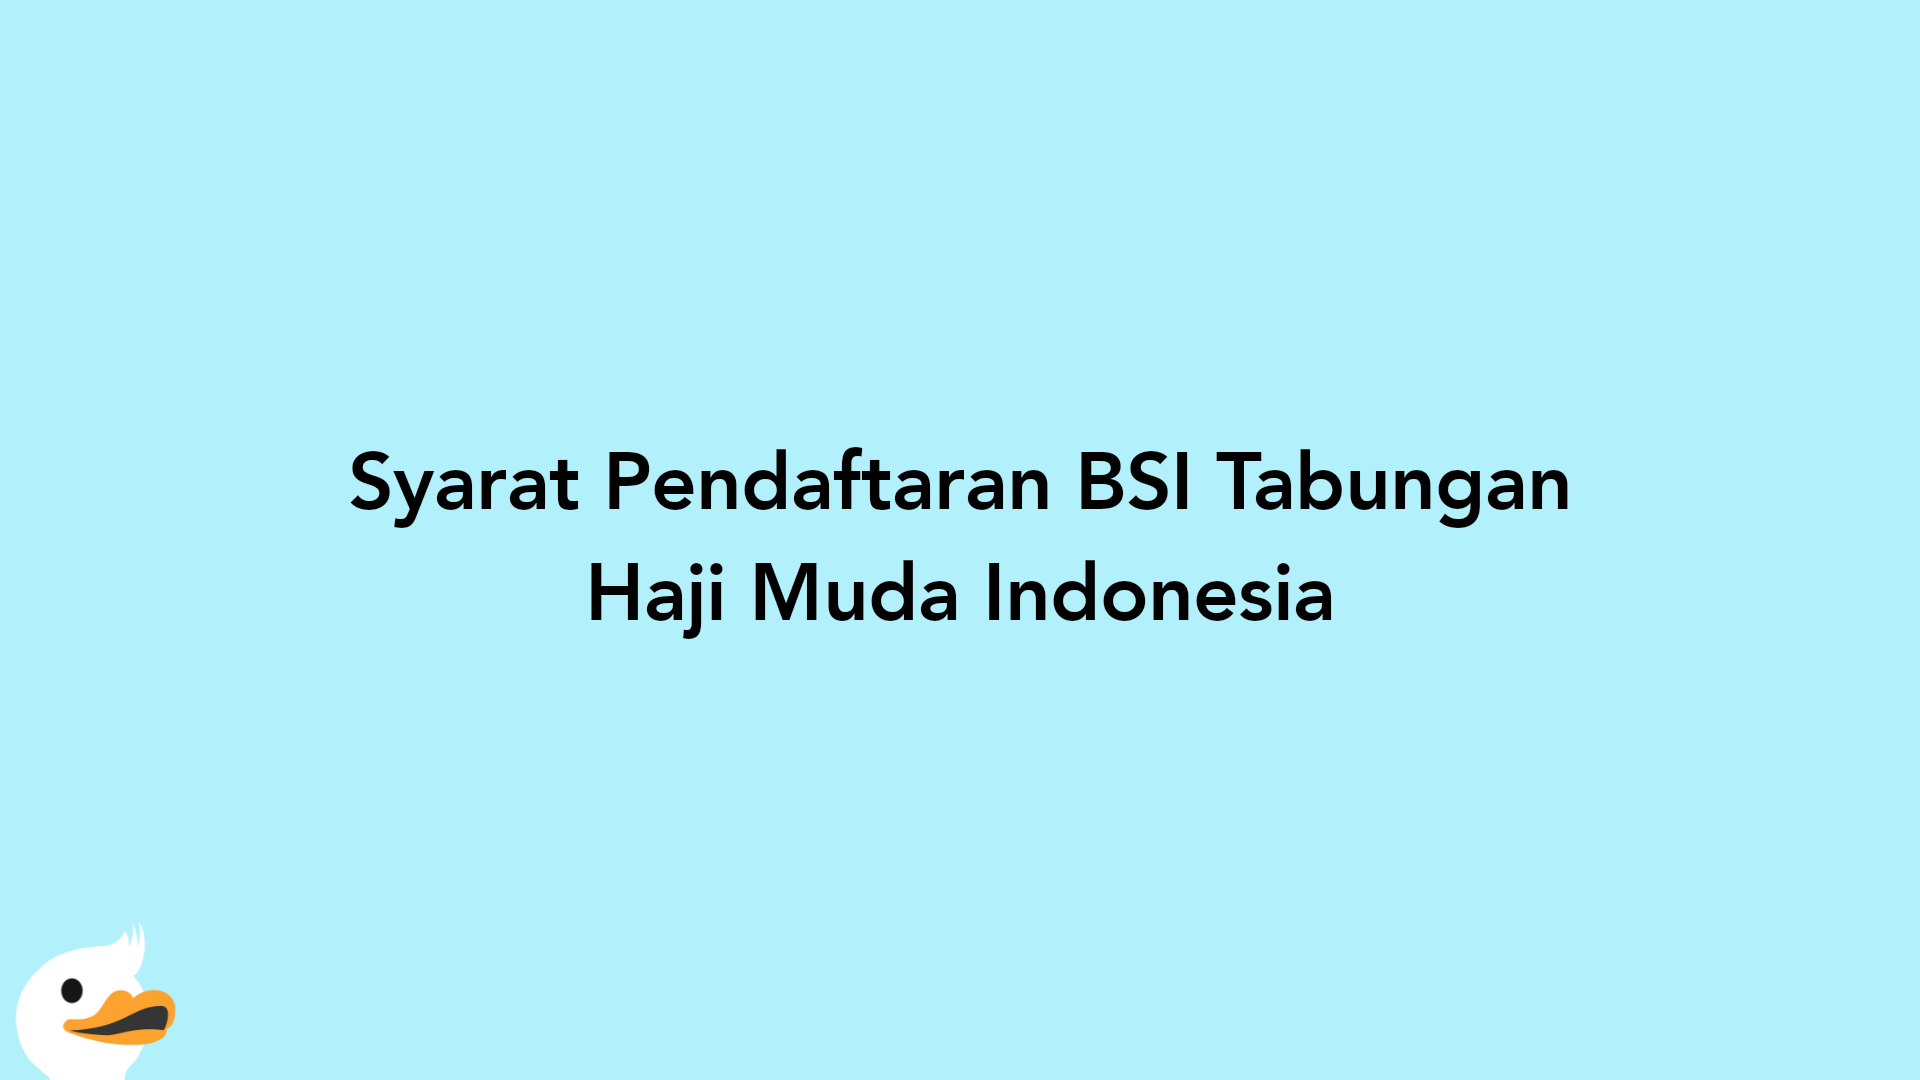 Syarat Pendaftaran BSI Tabungan Haji Muda Indonesia